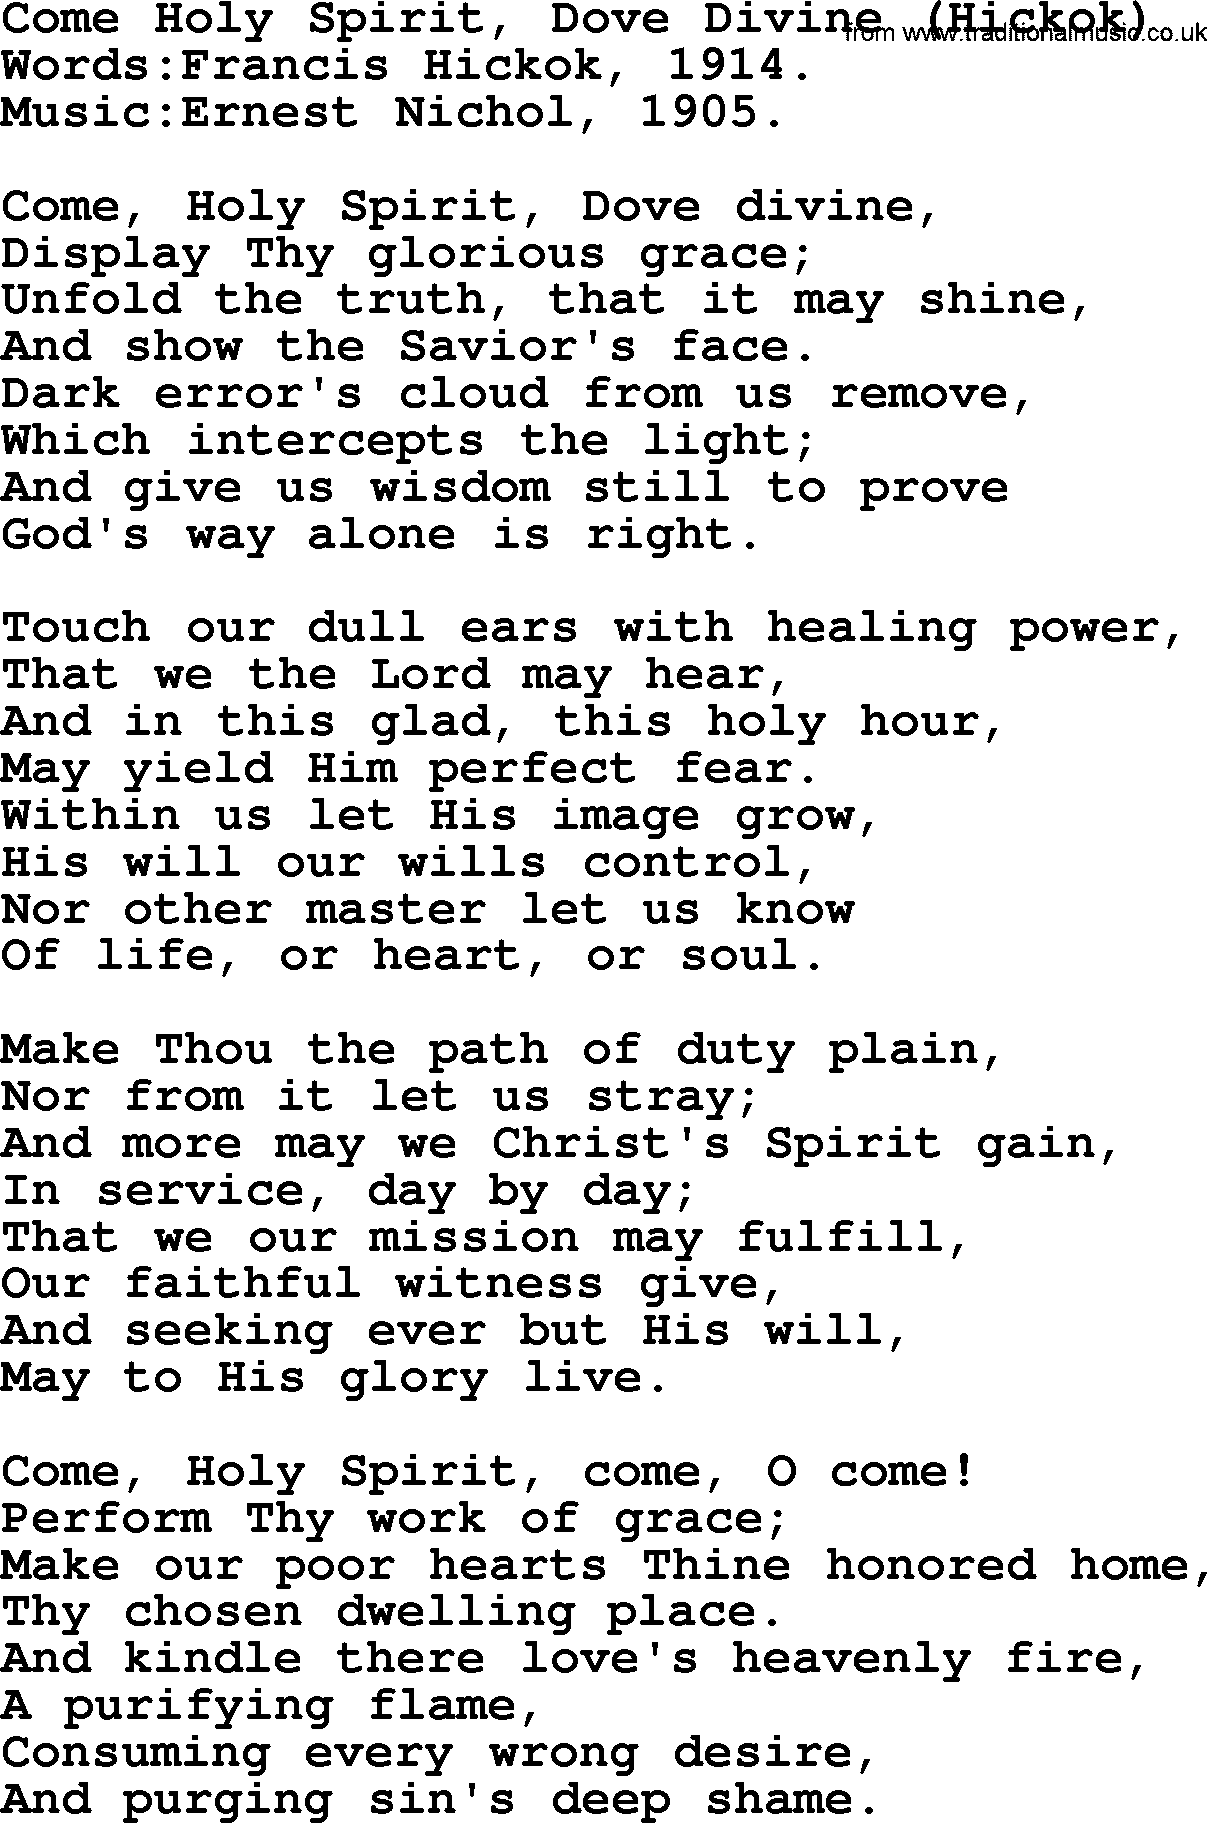 Pentacost Hymns, Hymn: Come Holy Spirit, Dove Divine (Hickok), lyrics with PDF